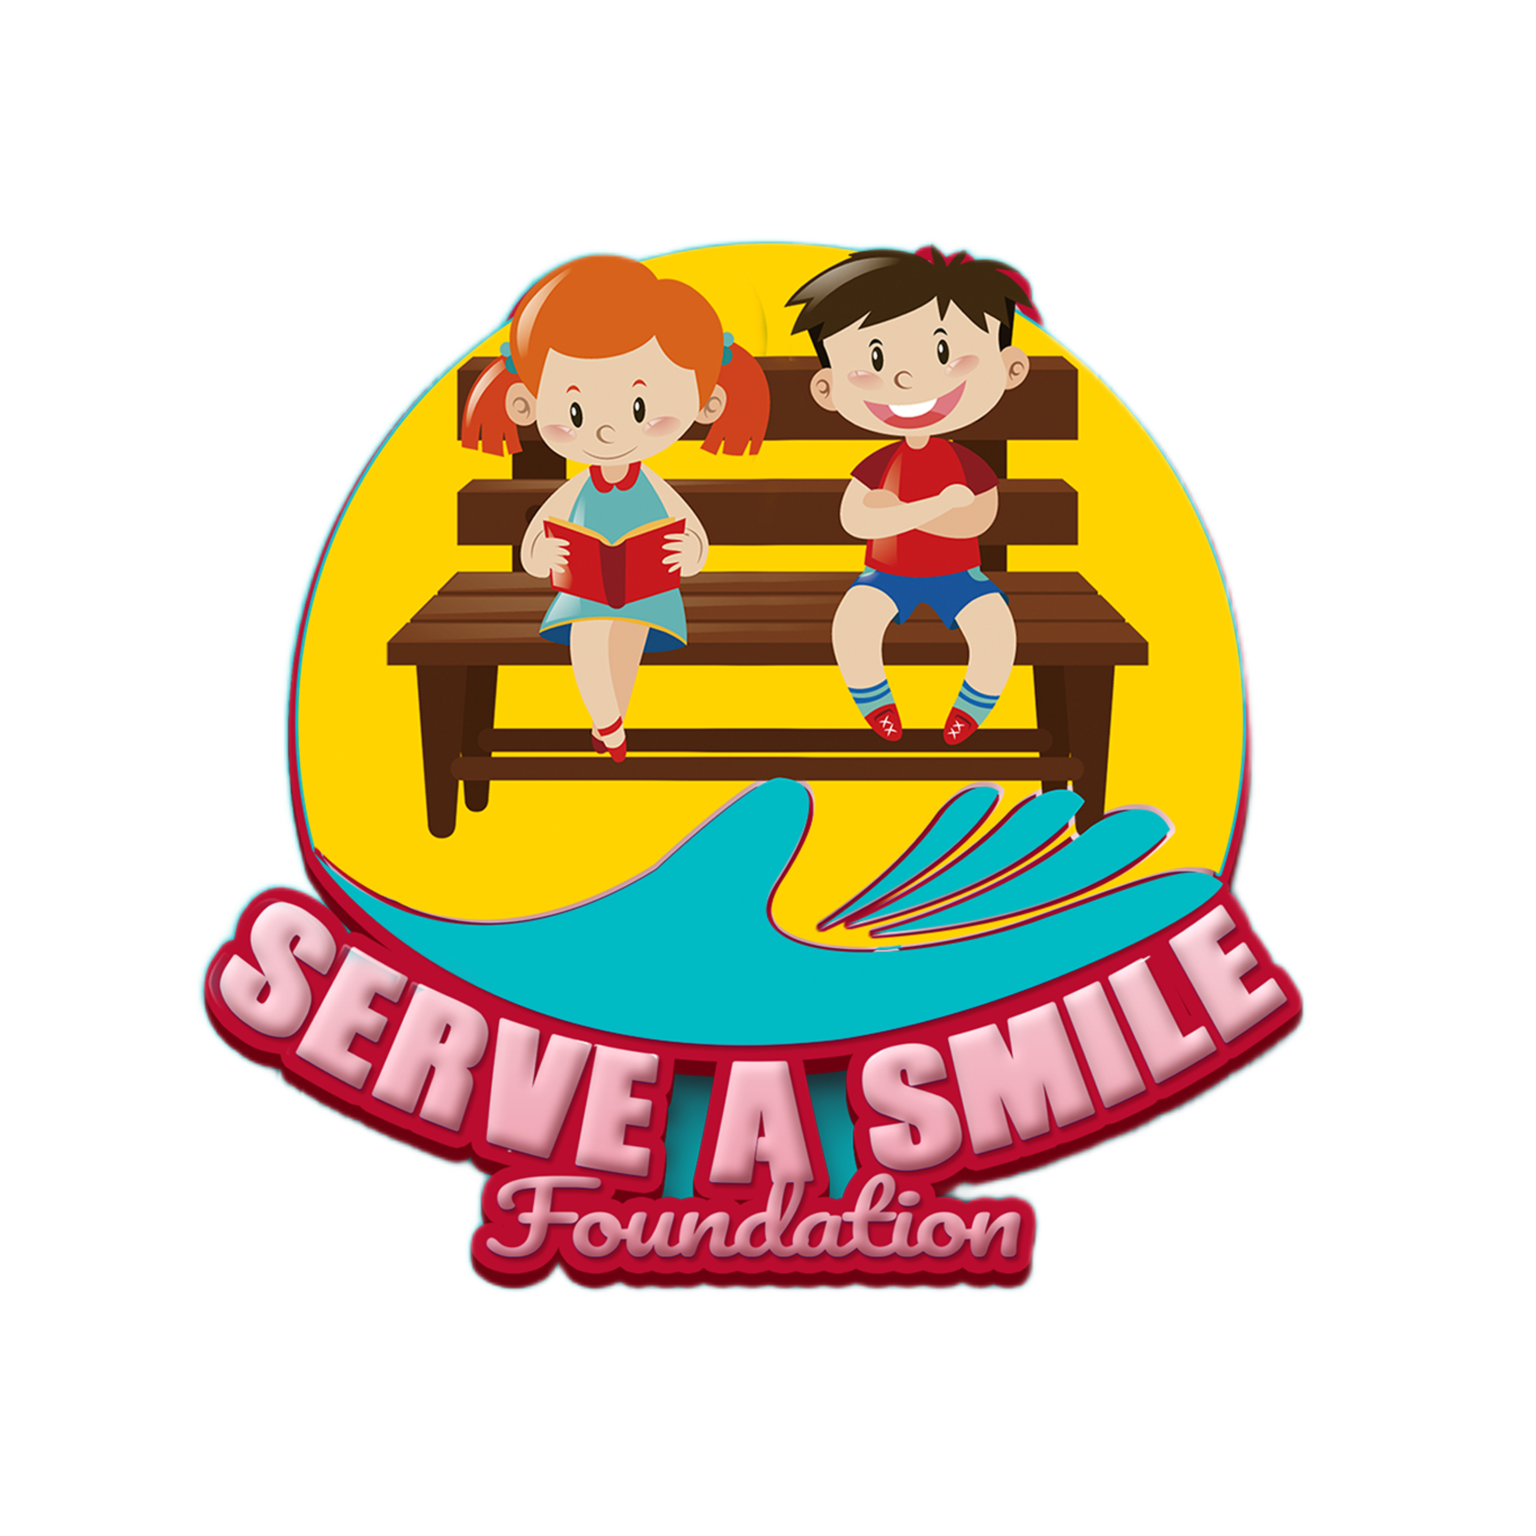 Serve A Smile logo